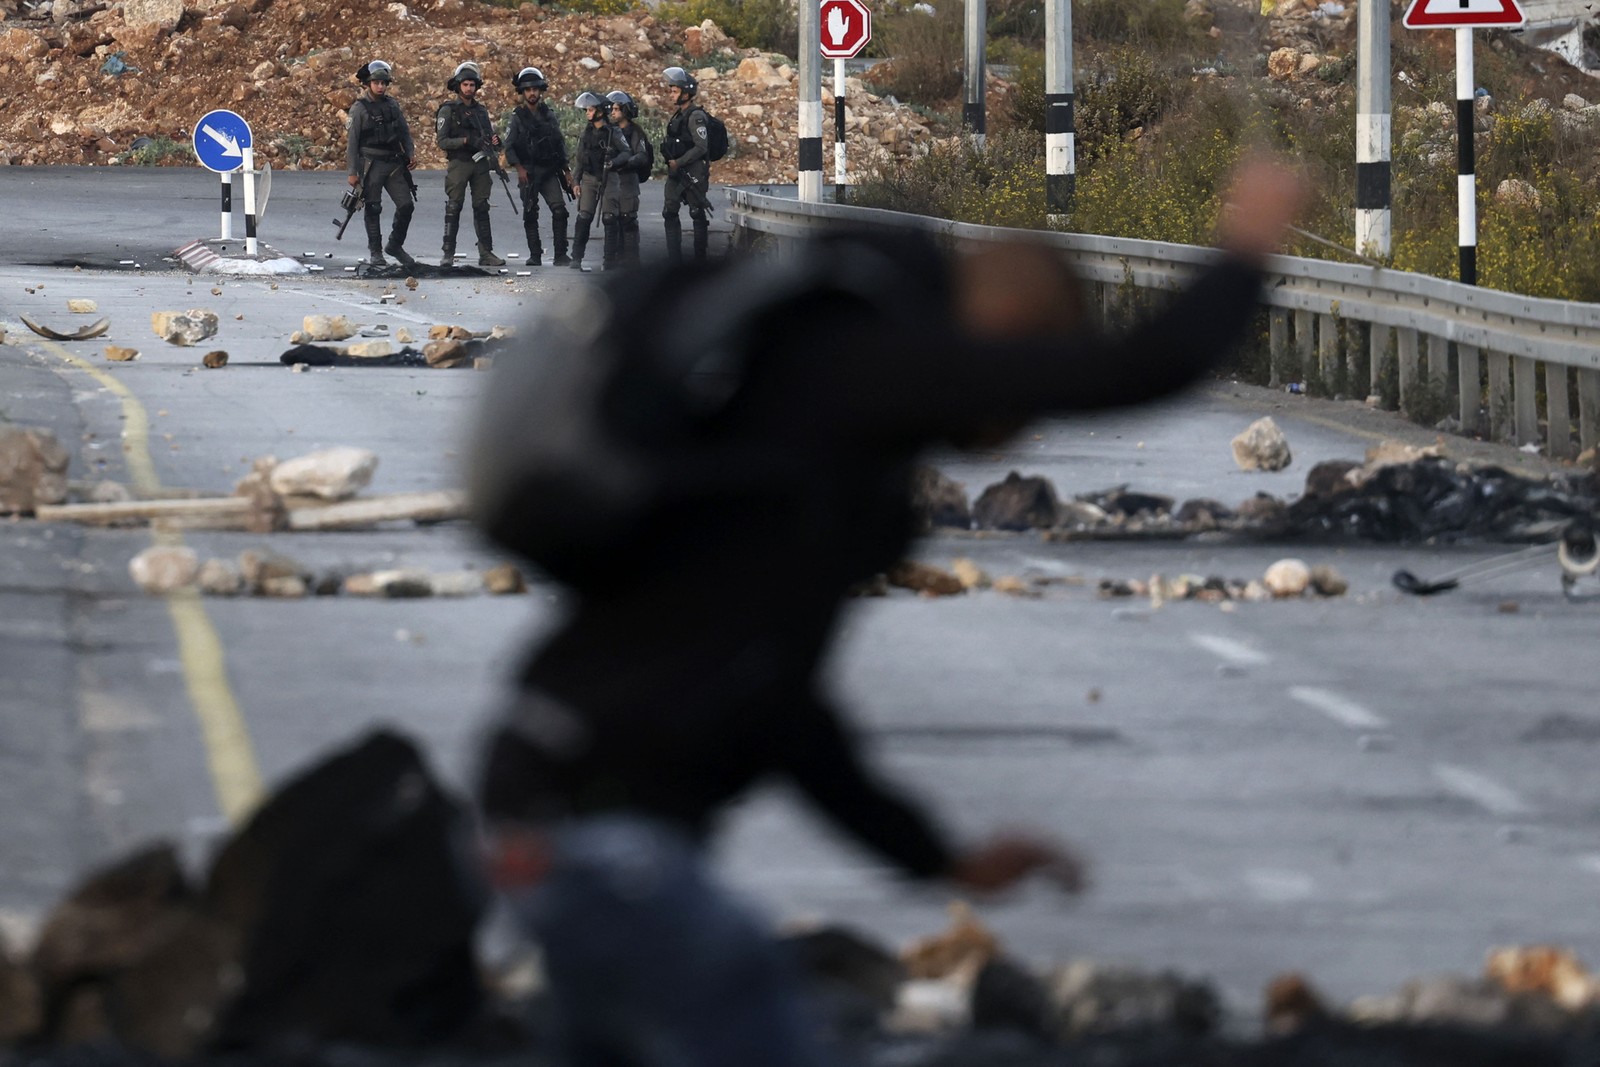 Soldados israelenses mantêm confrontos com palestinos na entrada norte da cidade de Ramallah, perto do assentamento israelense de Beit El — Foto: ABBAS MOMANI/AFP